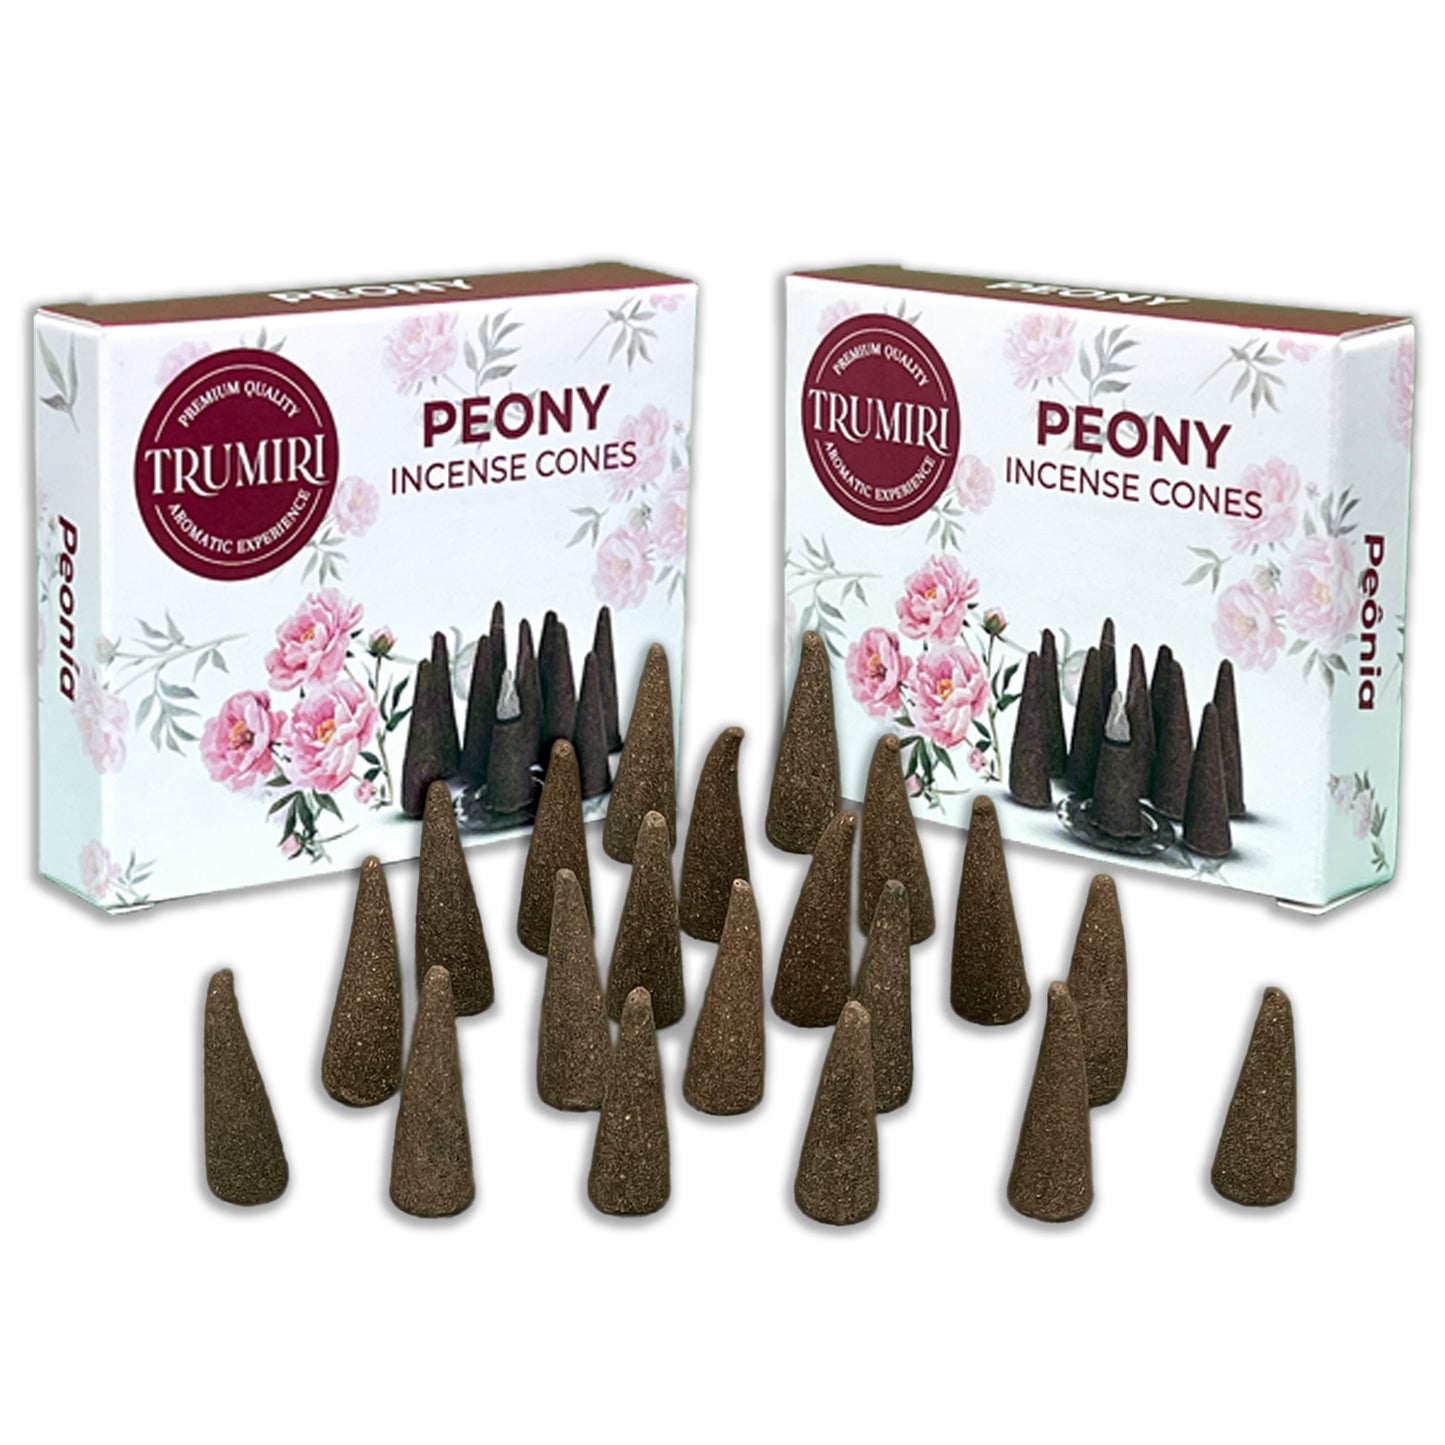 Trumiri Incense Cones Twin Packs - 2 Packs of 10 Cones - Total 20 Cones